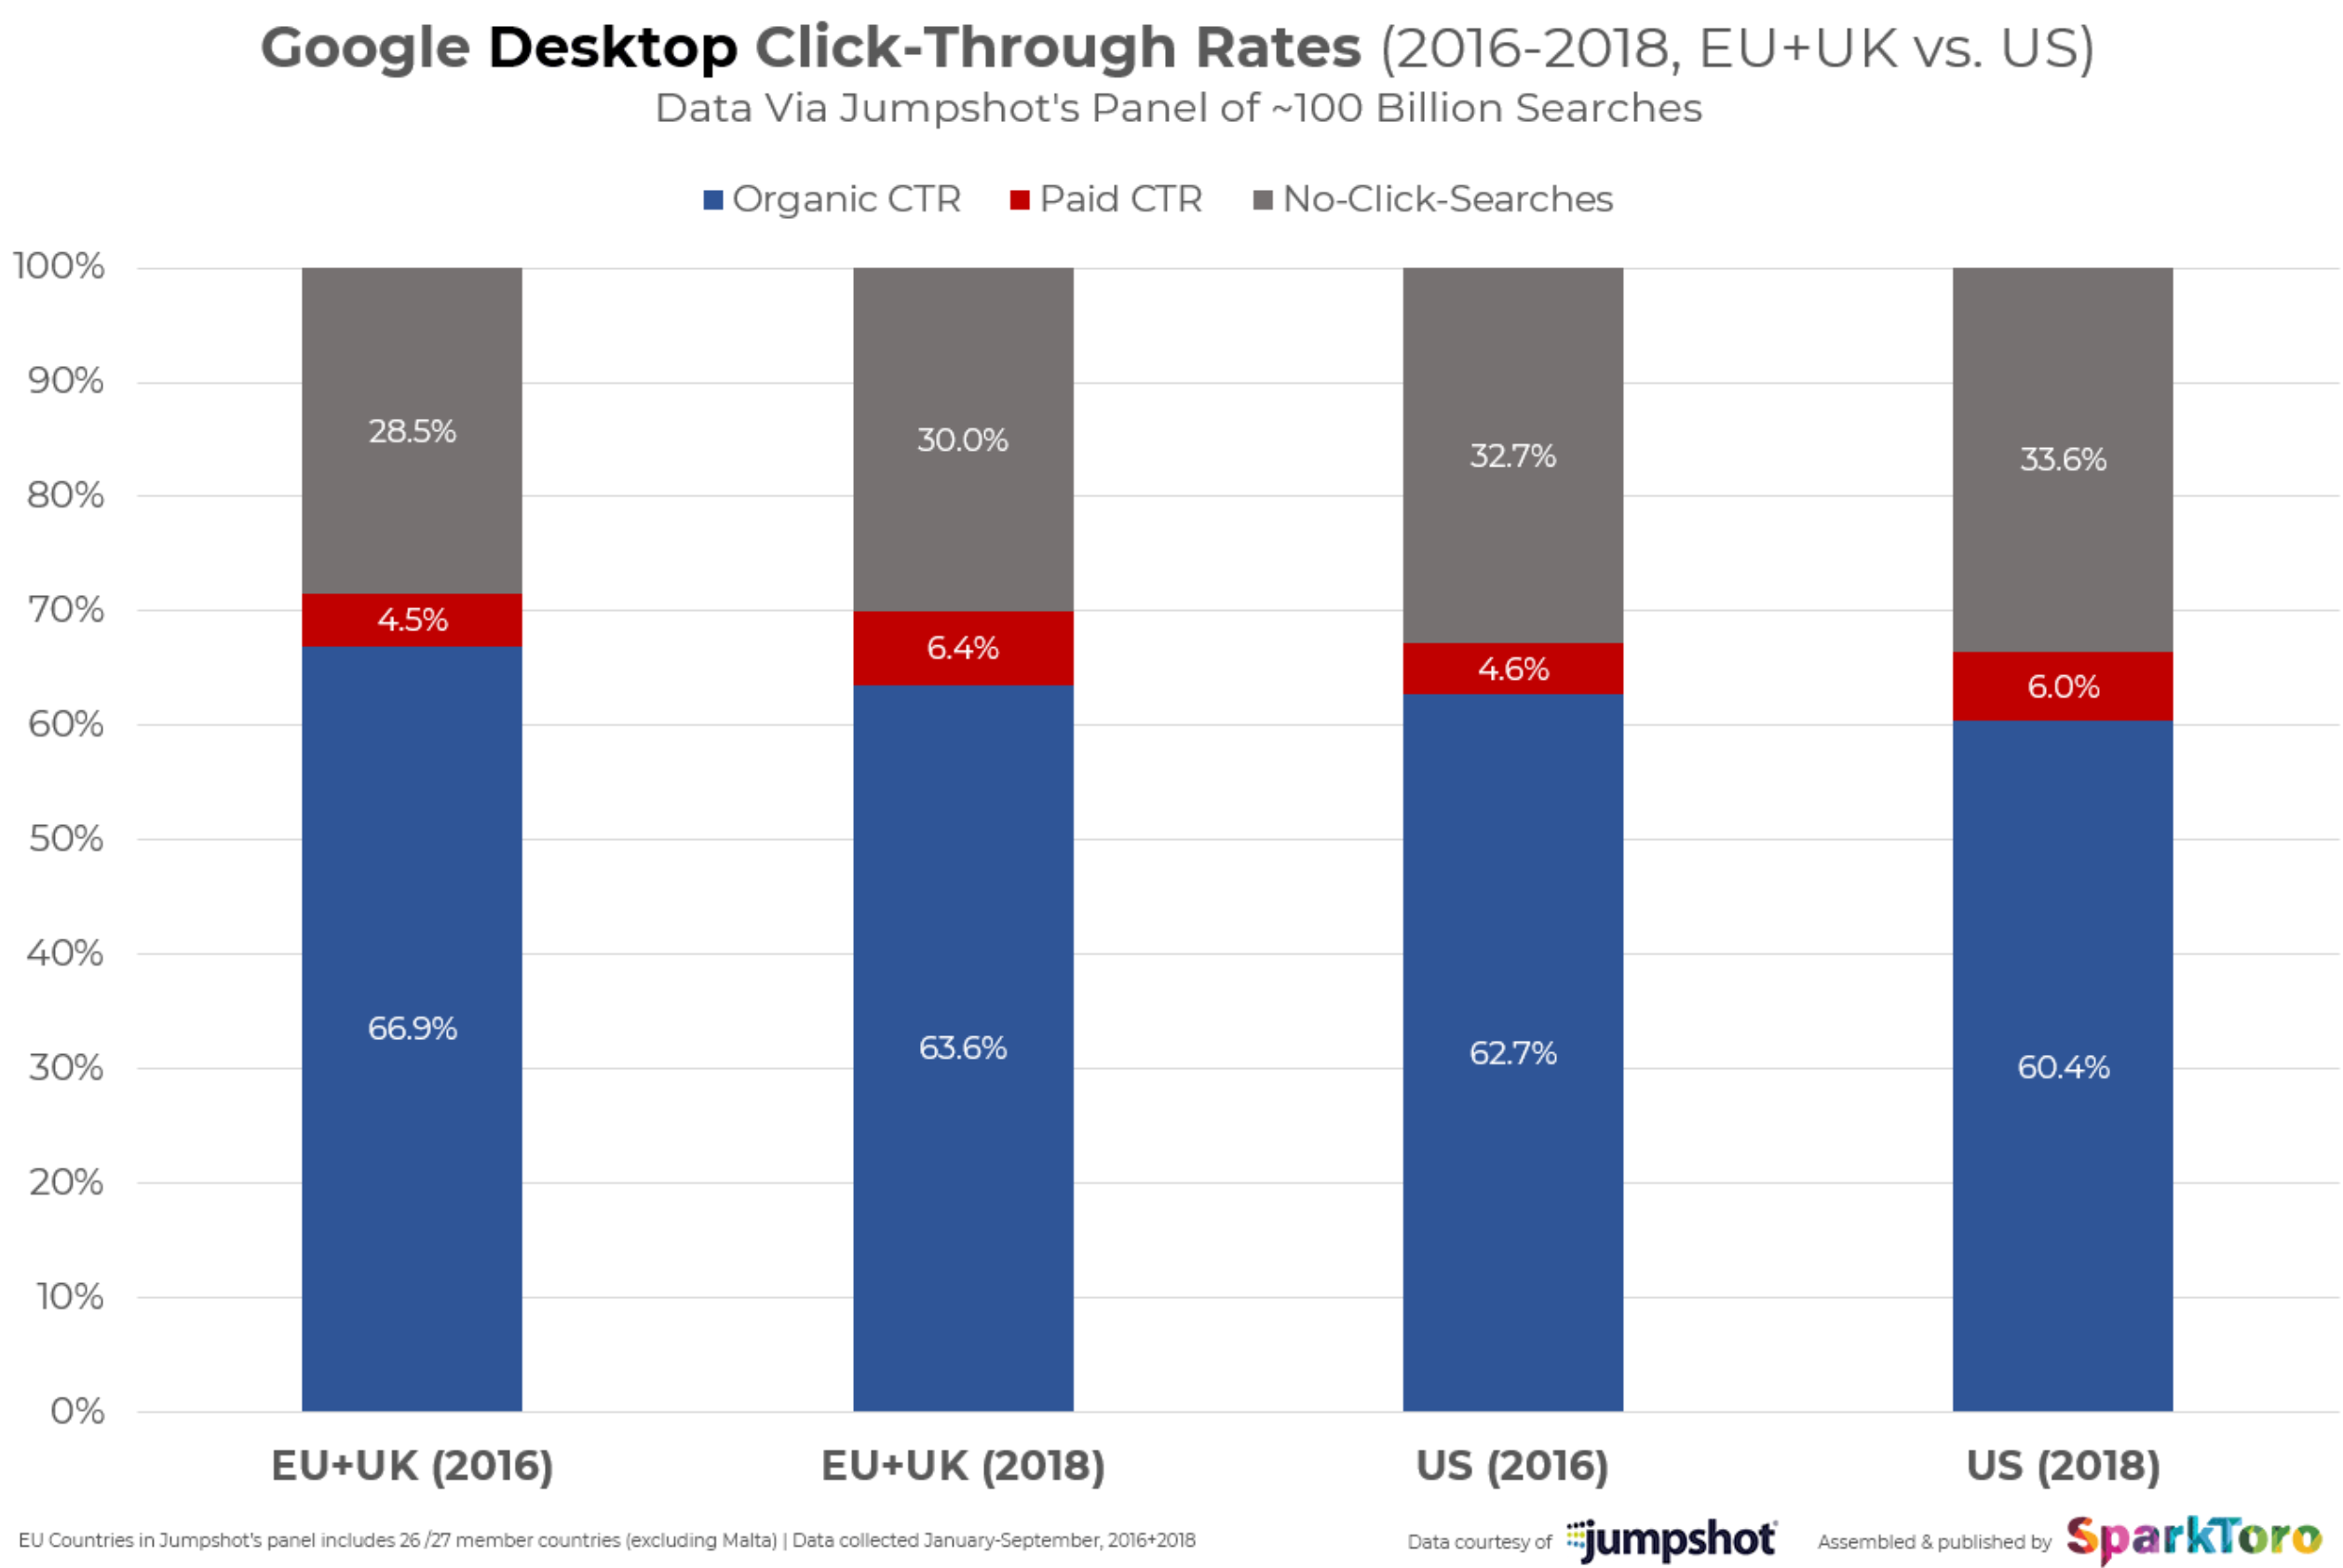 Google desktop click-through rates